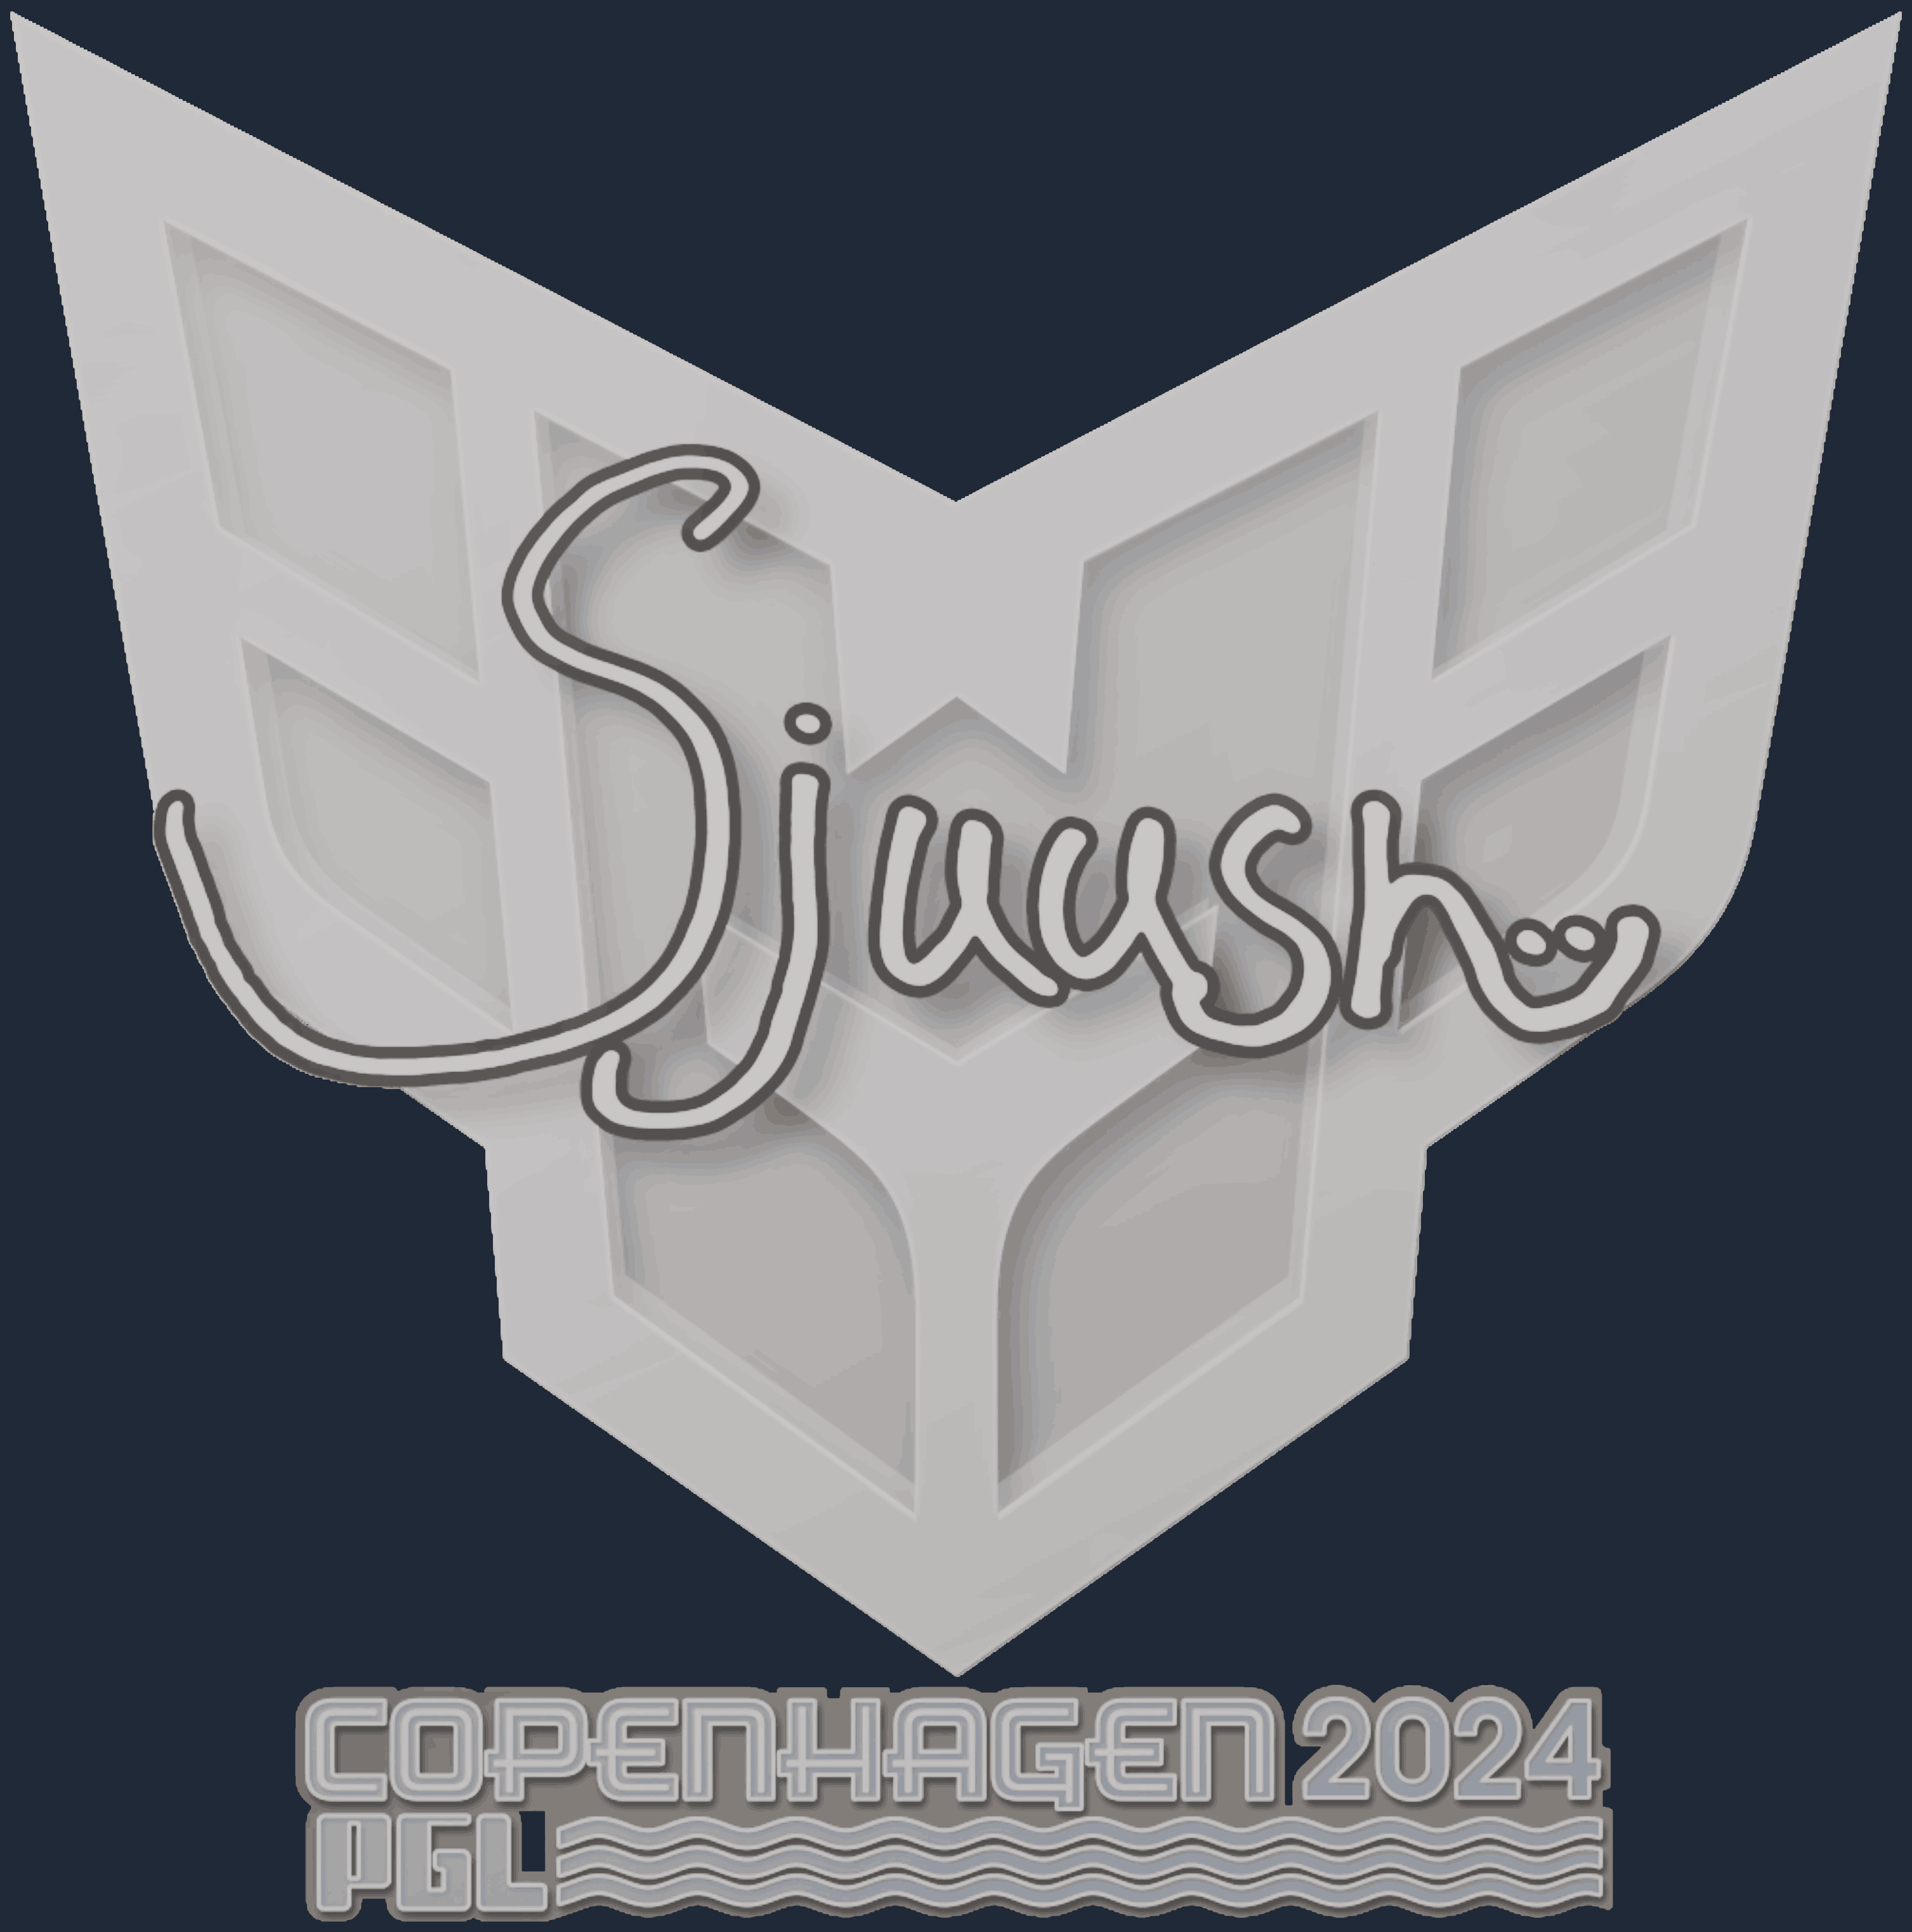 Sticker | sjuush | Copenhagen 2024 Screenshot